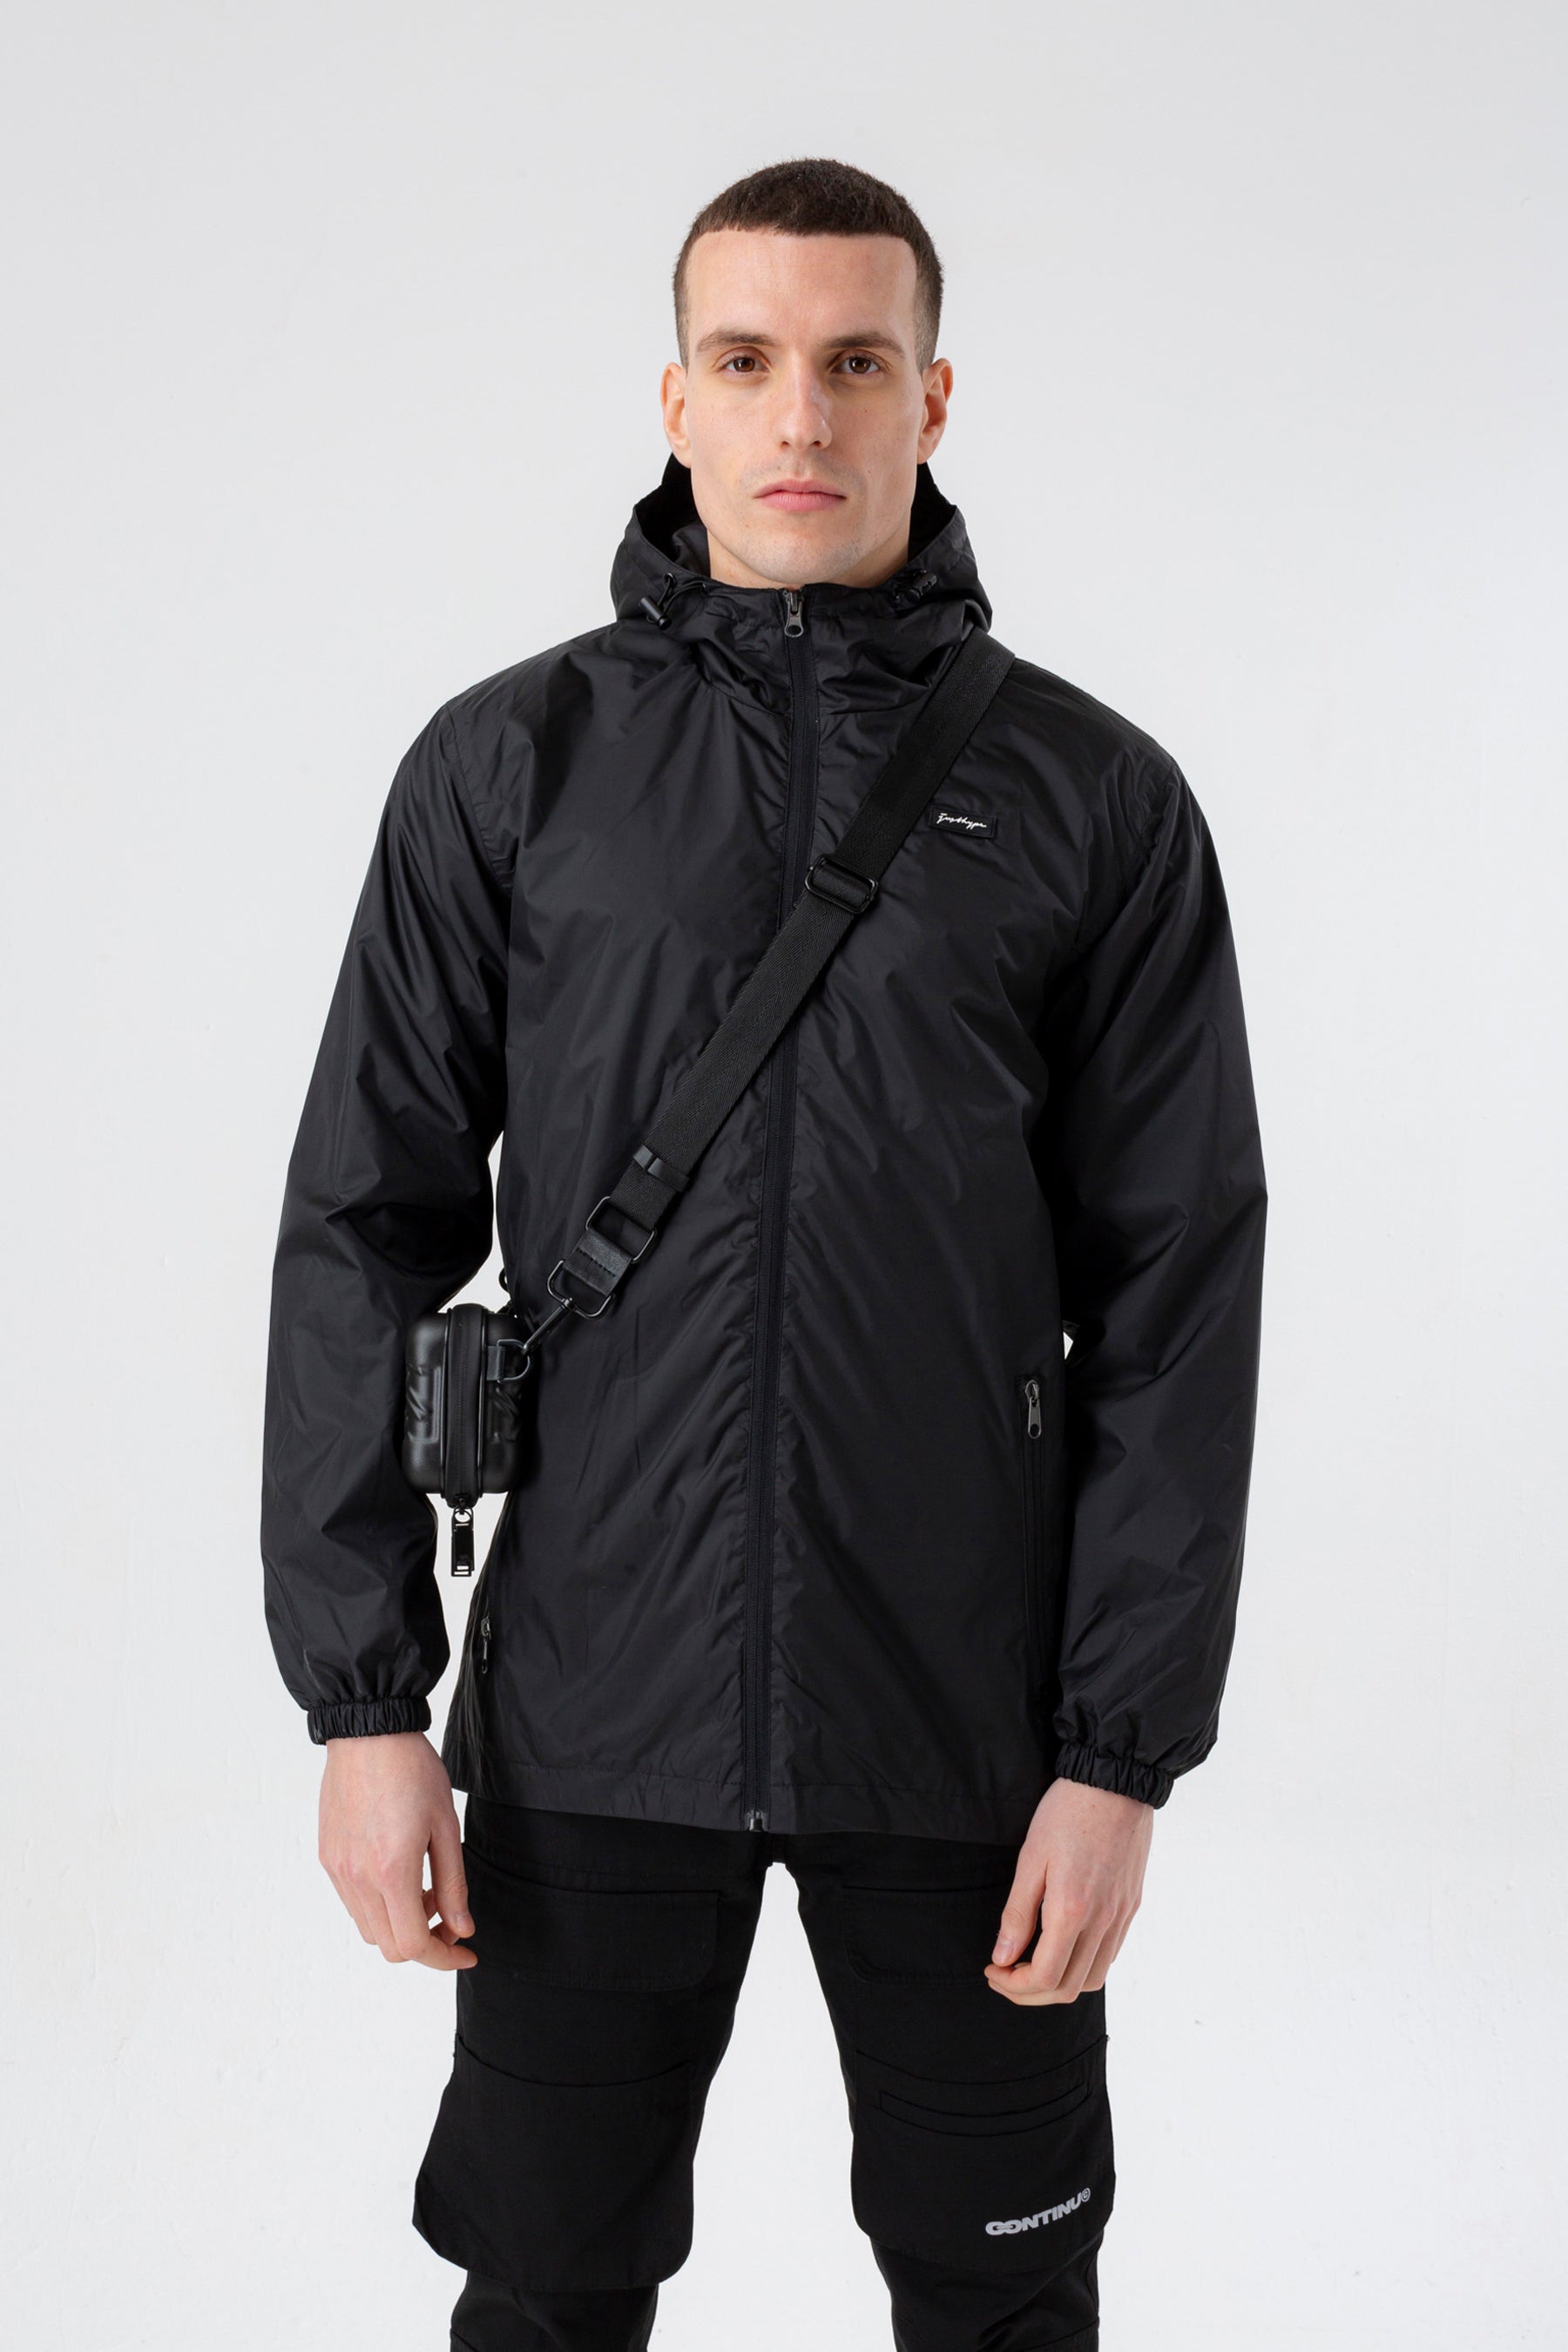 hype black showerproof style men’s jacket